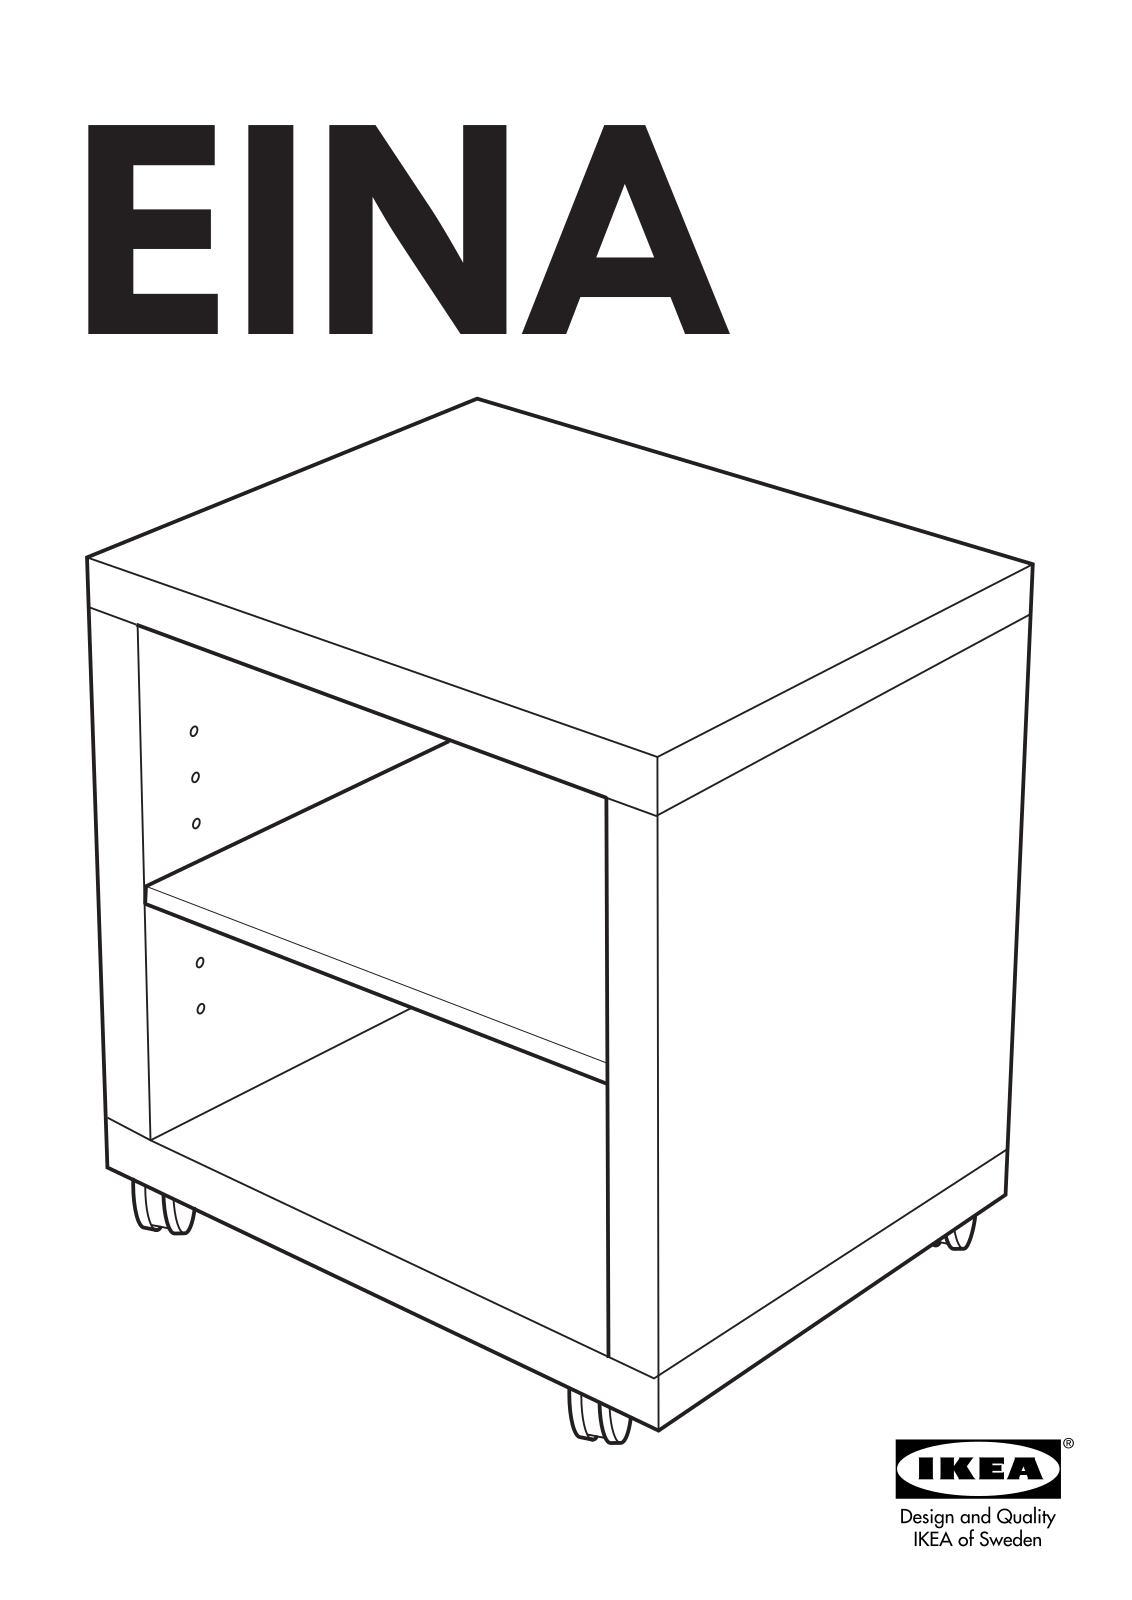 IKEA EINA BEDSIDE TABLE Assembly Instruction